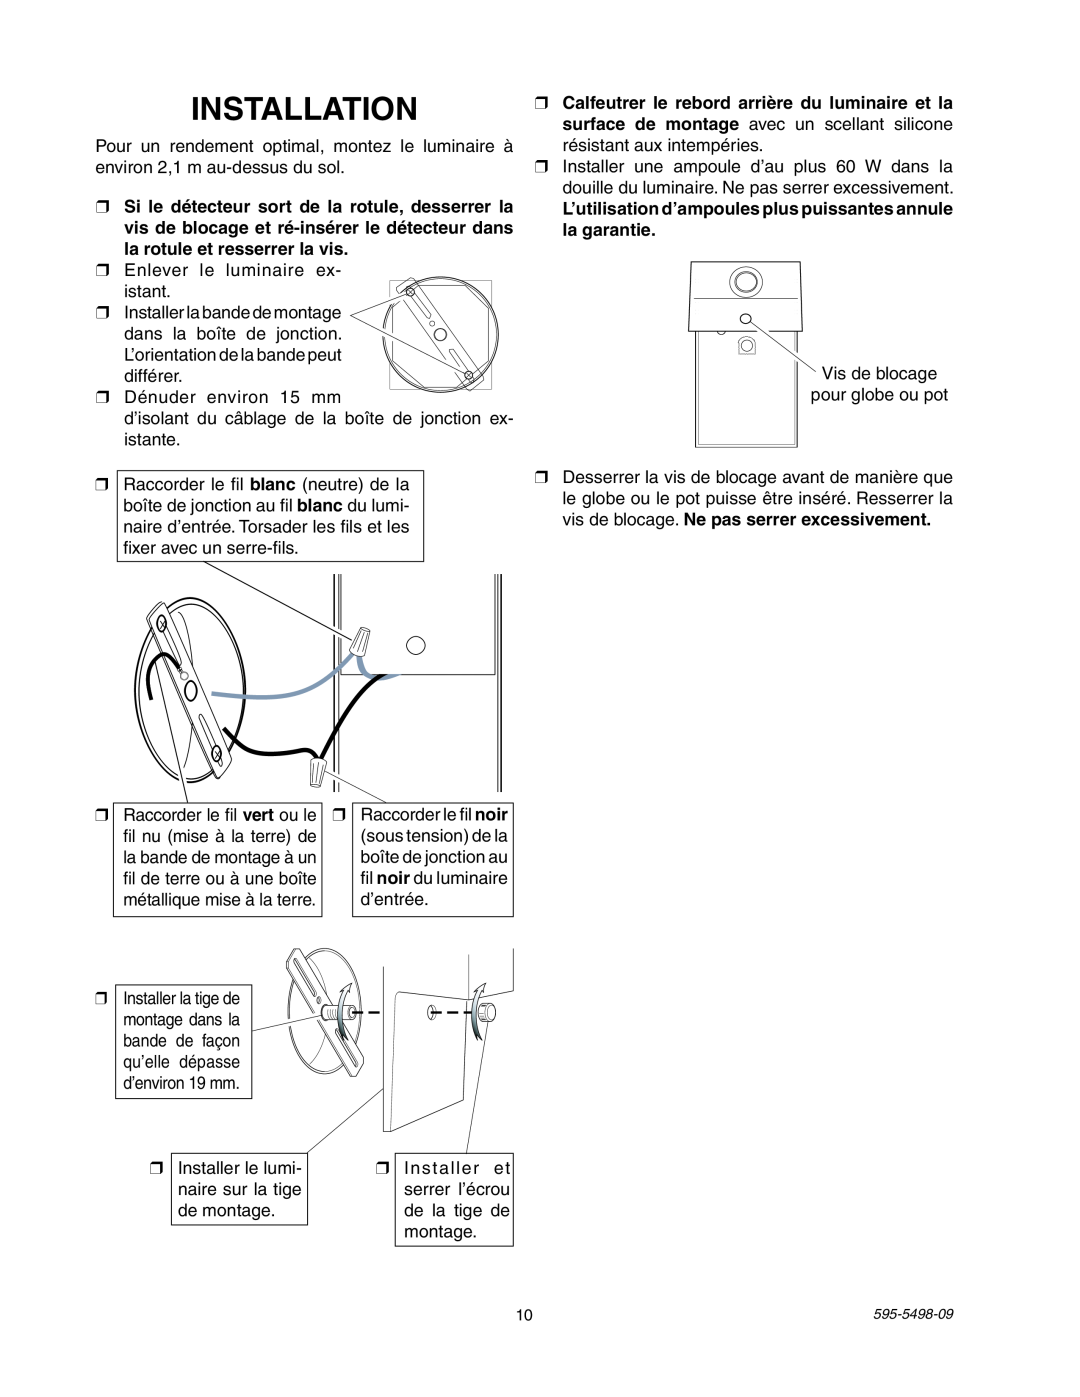 Heath Zenith SL-5610/15 manual Installation, Enlever le luminaire ex istant 